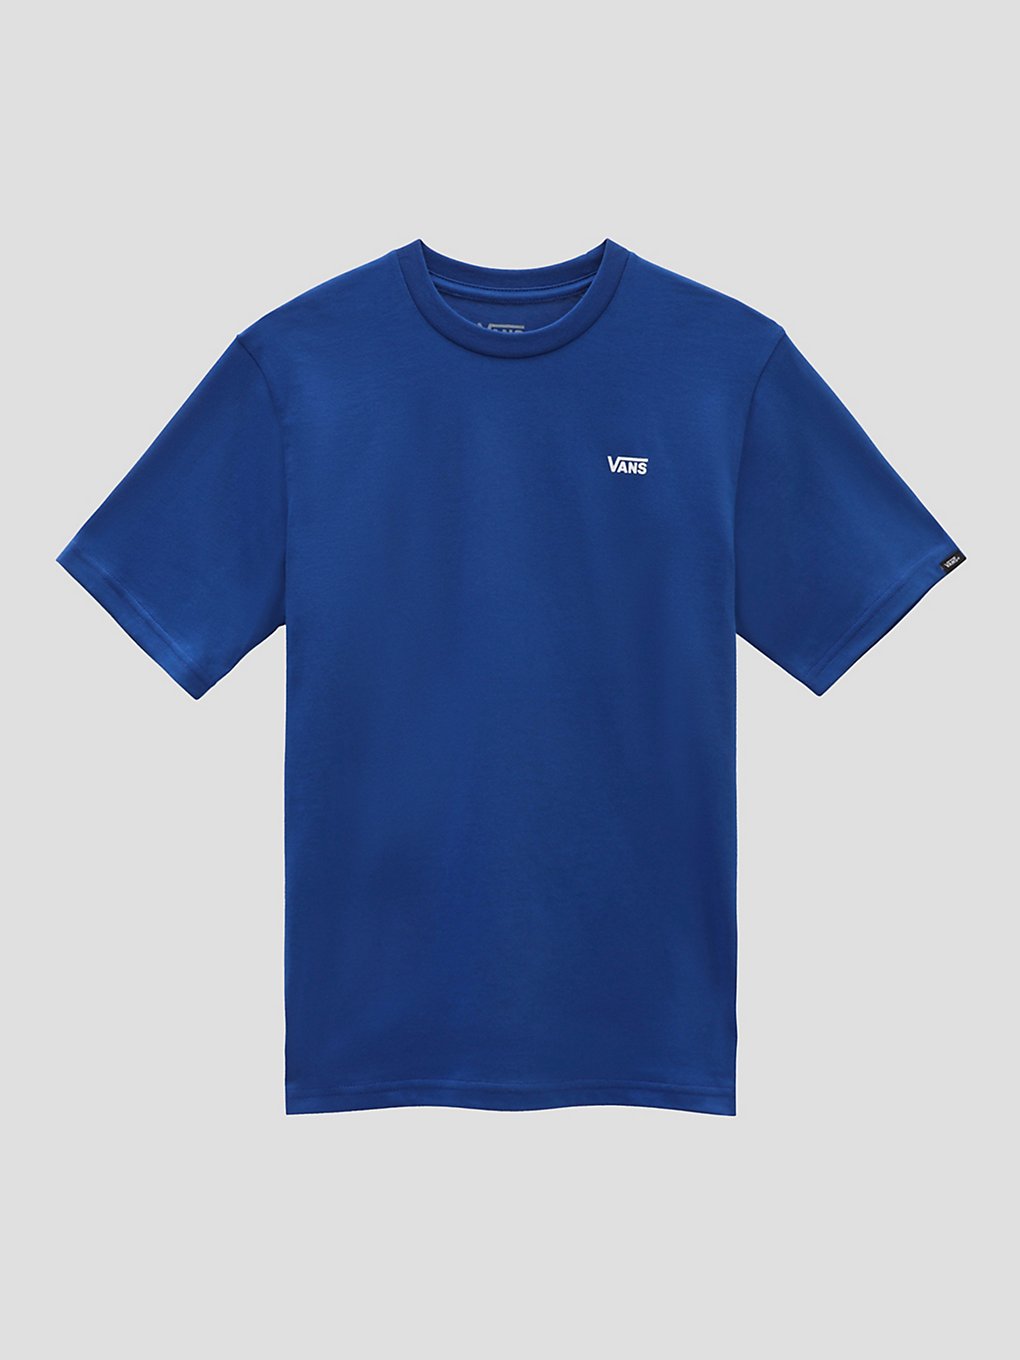 Vans Left Chest T-Shirt true blue kaufen